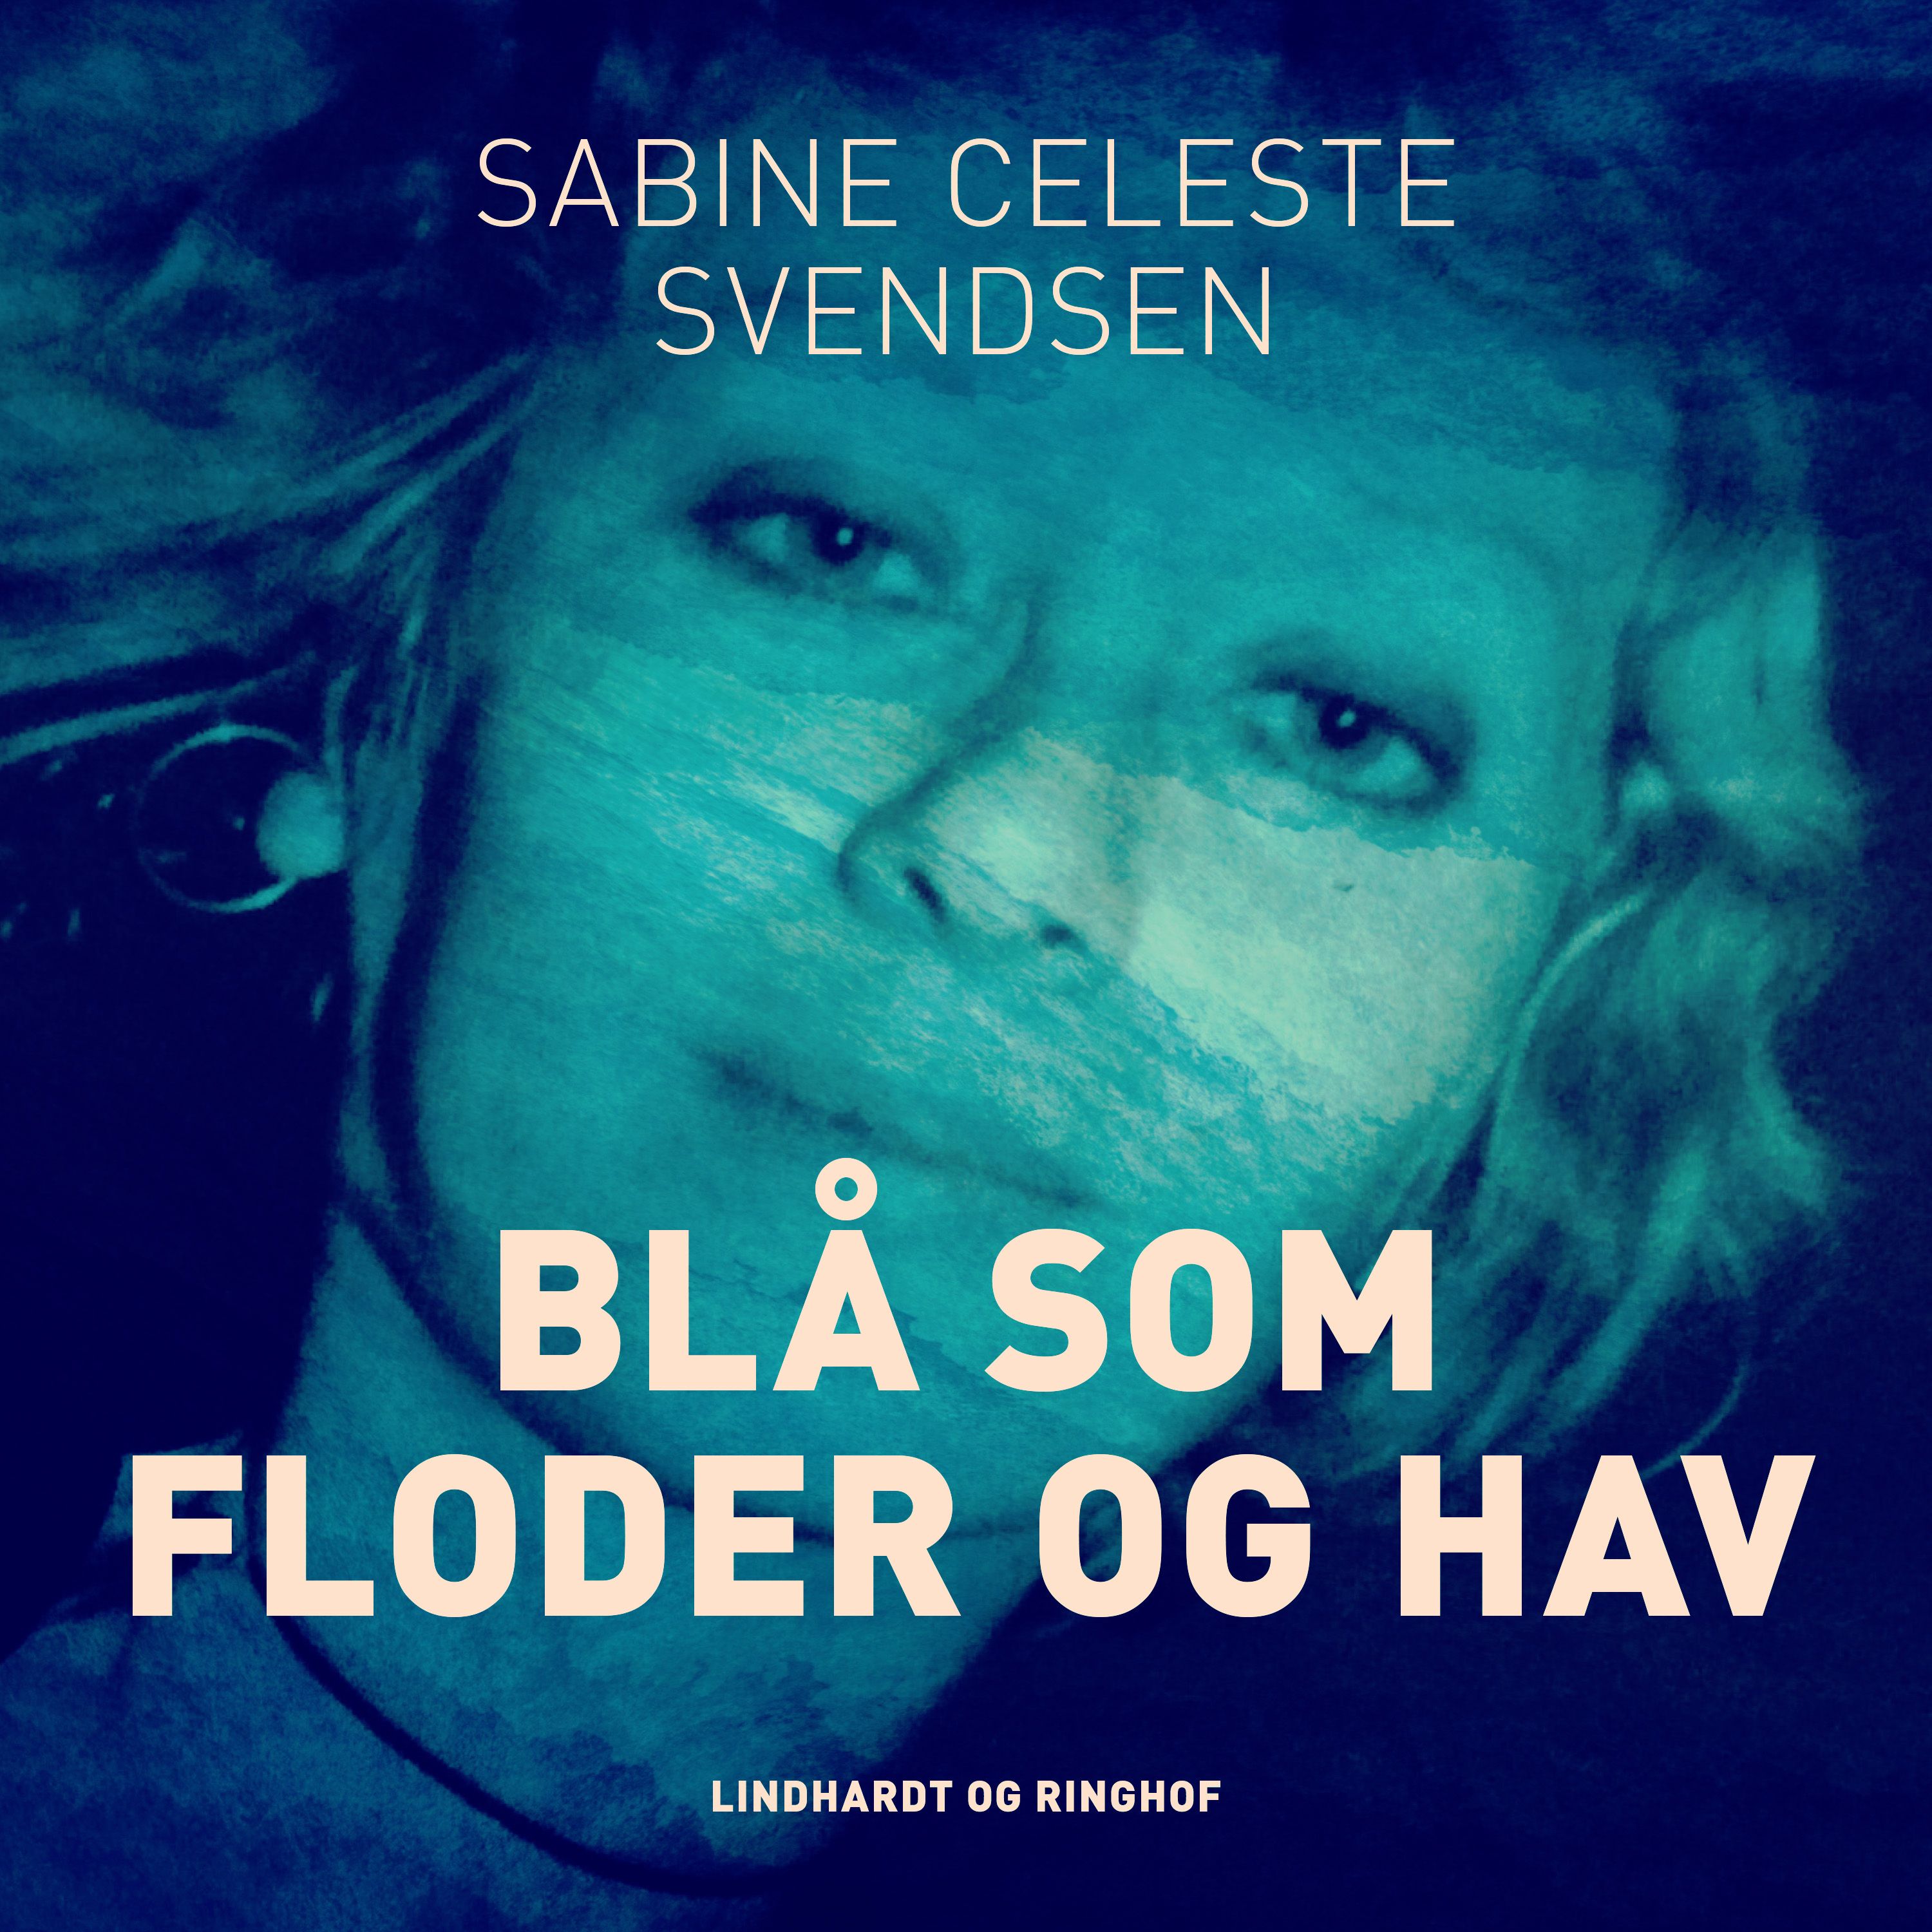 Blå som floder og hav, audiobook by Sabine Celeste Svendsen